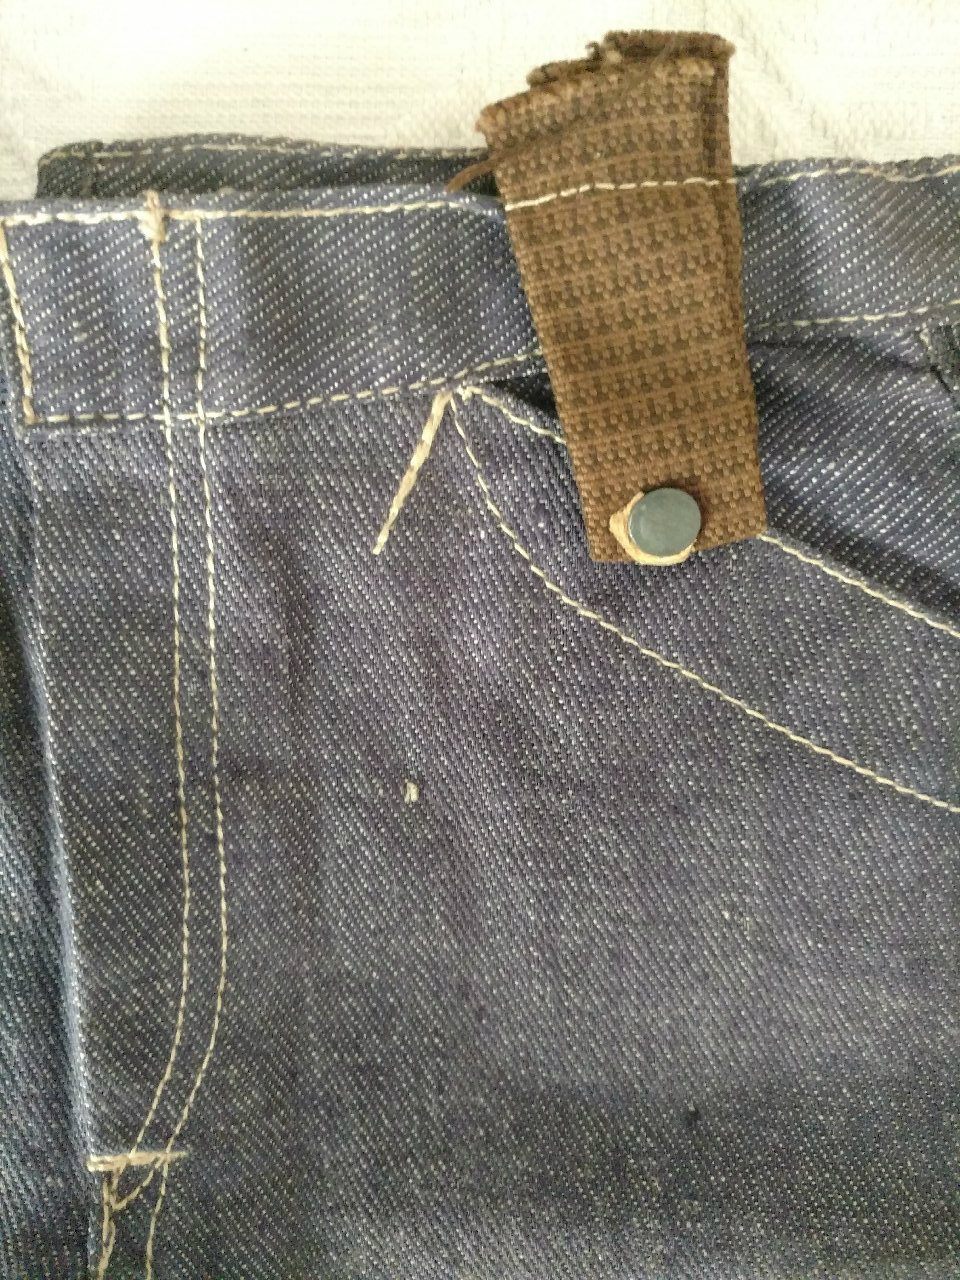 Salesman Sample Jeans Work Wear Denim Vintage 1930s Buckle Back - The ...